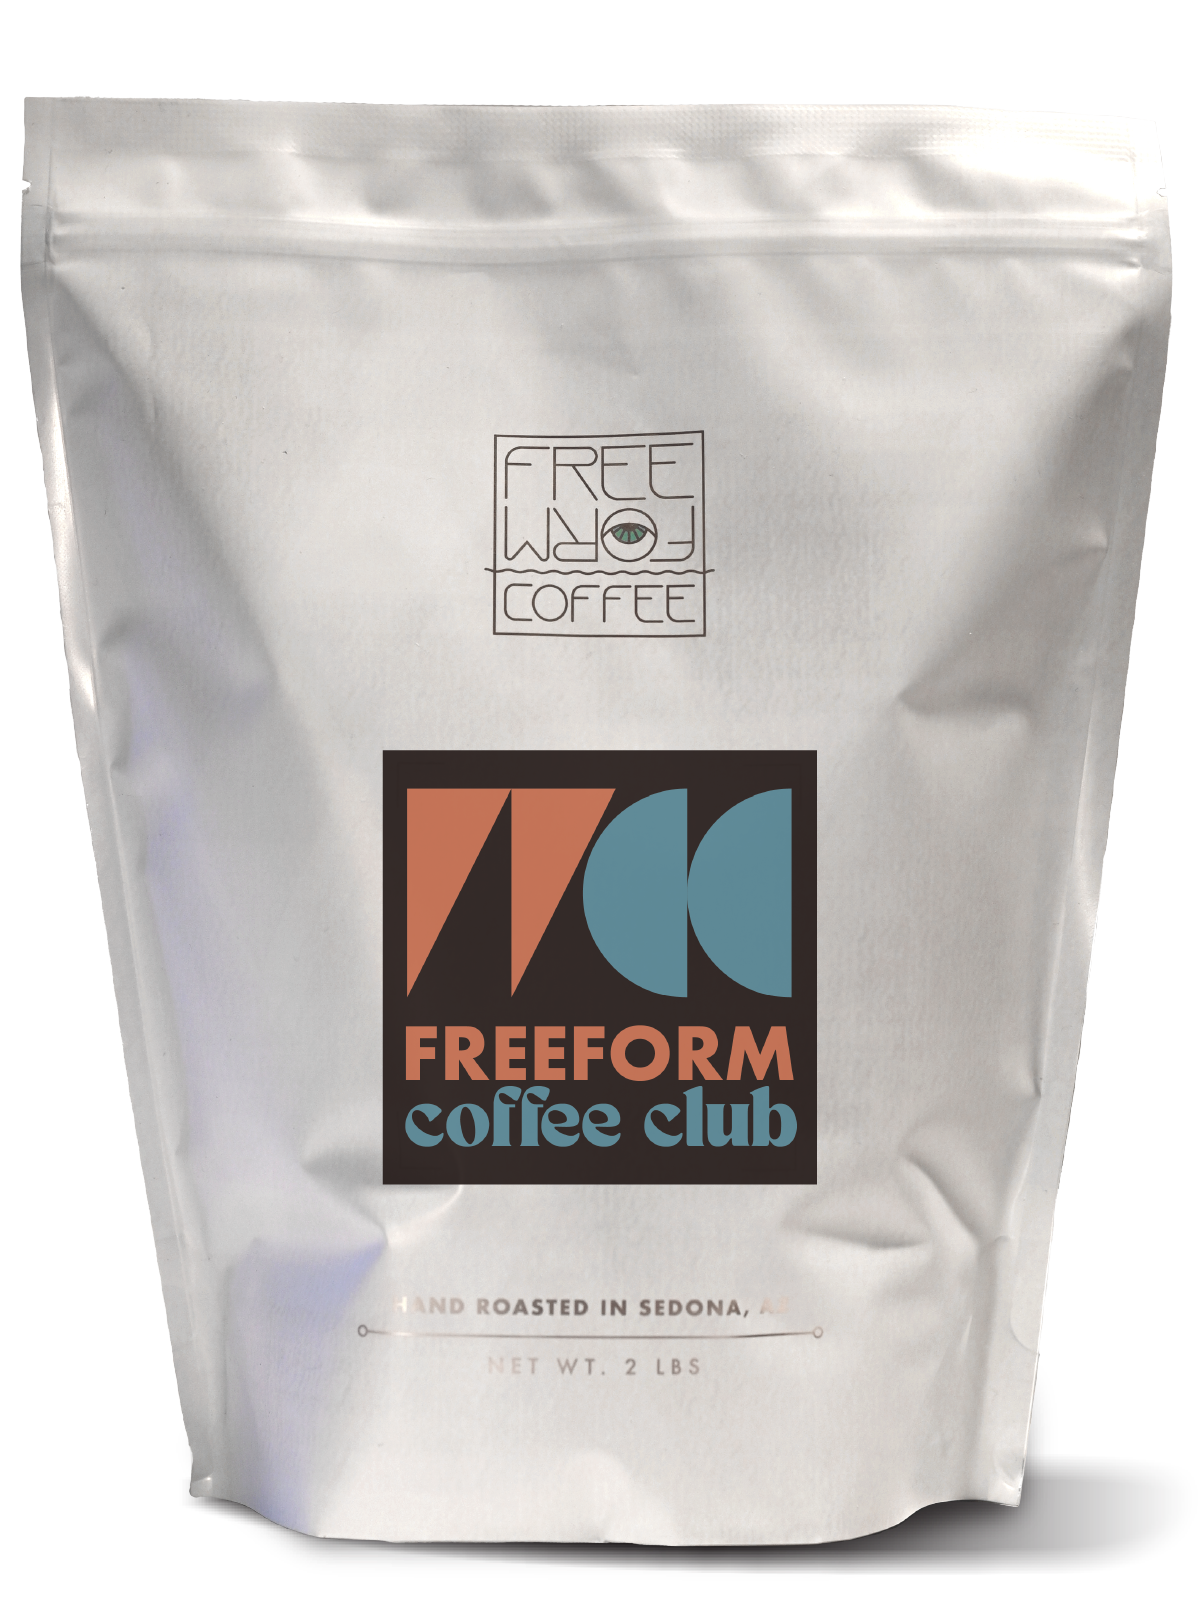 FreeForm Coffee Club Gift Subscription